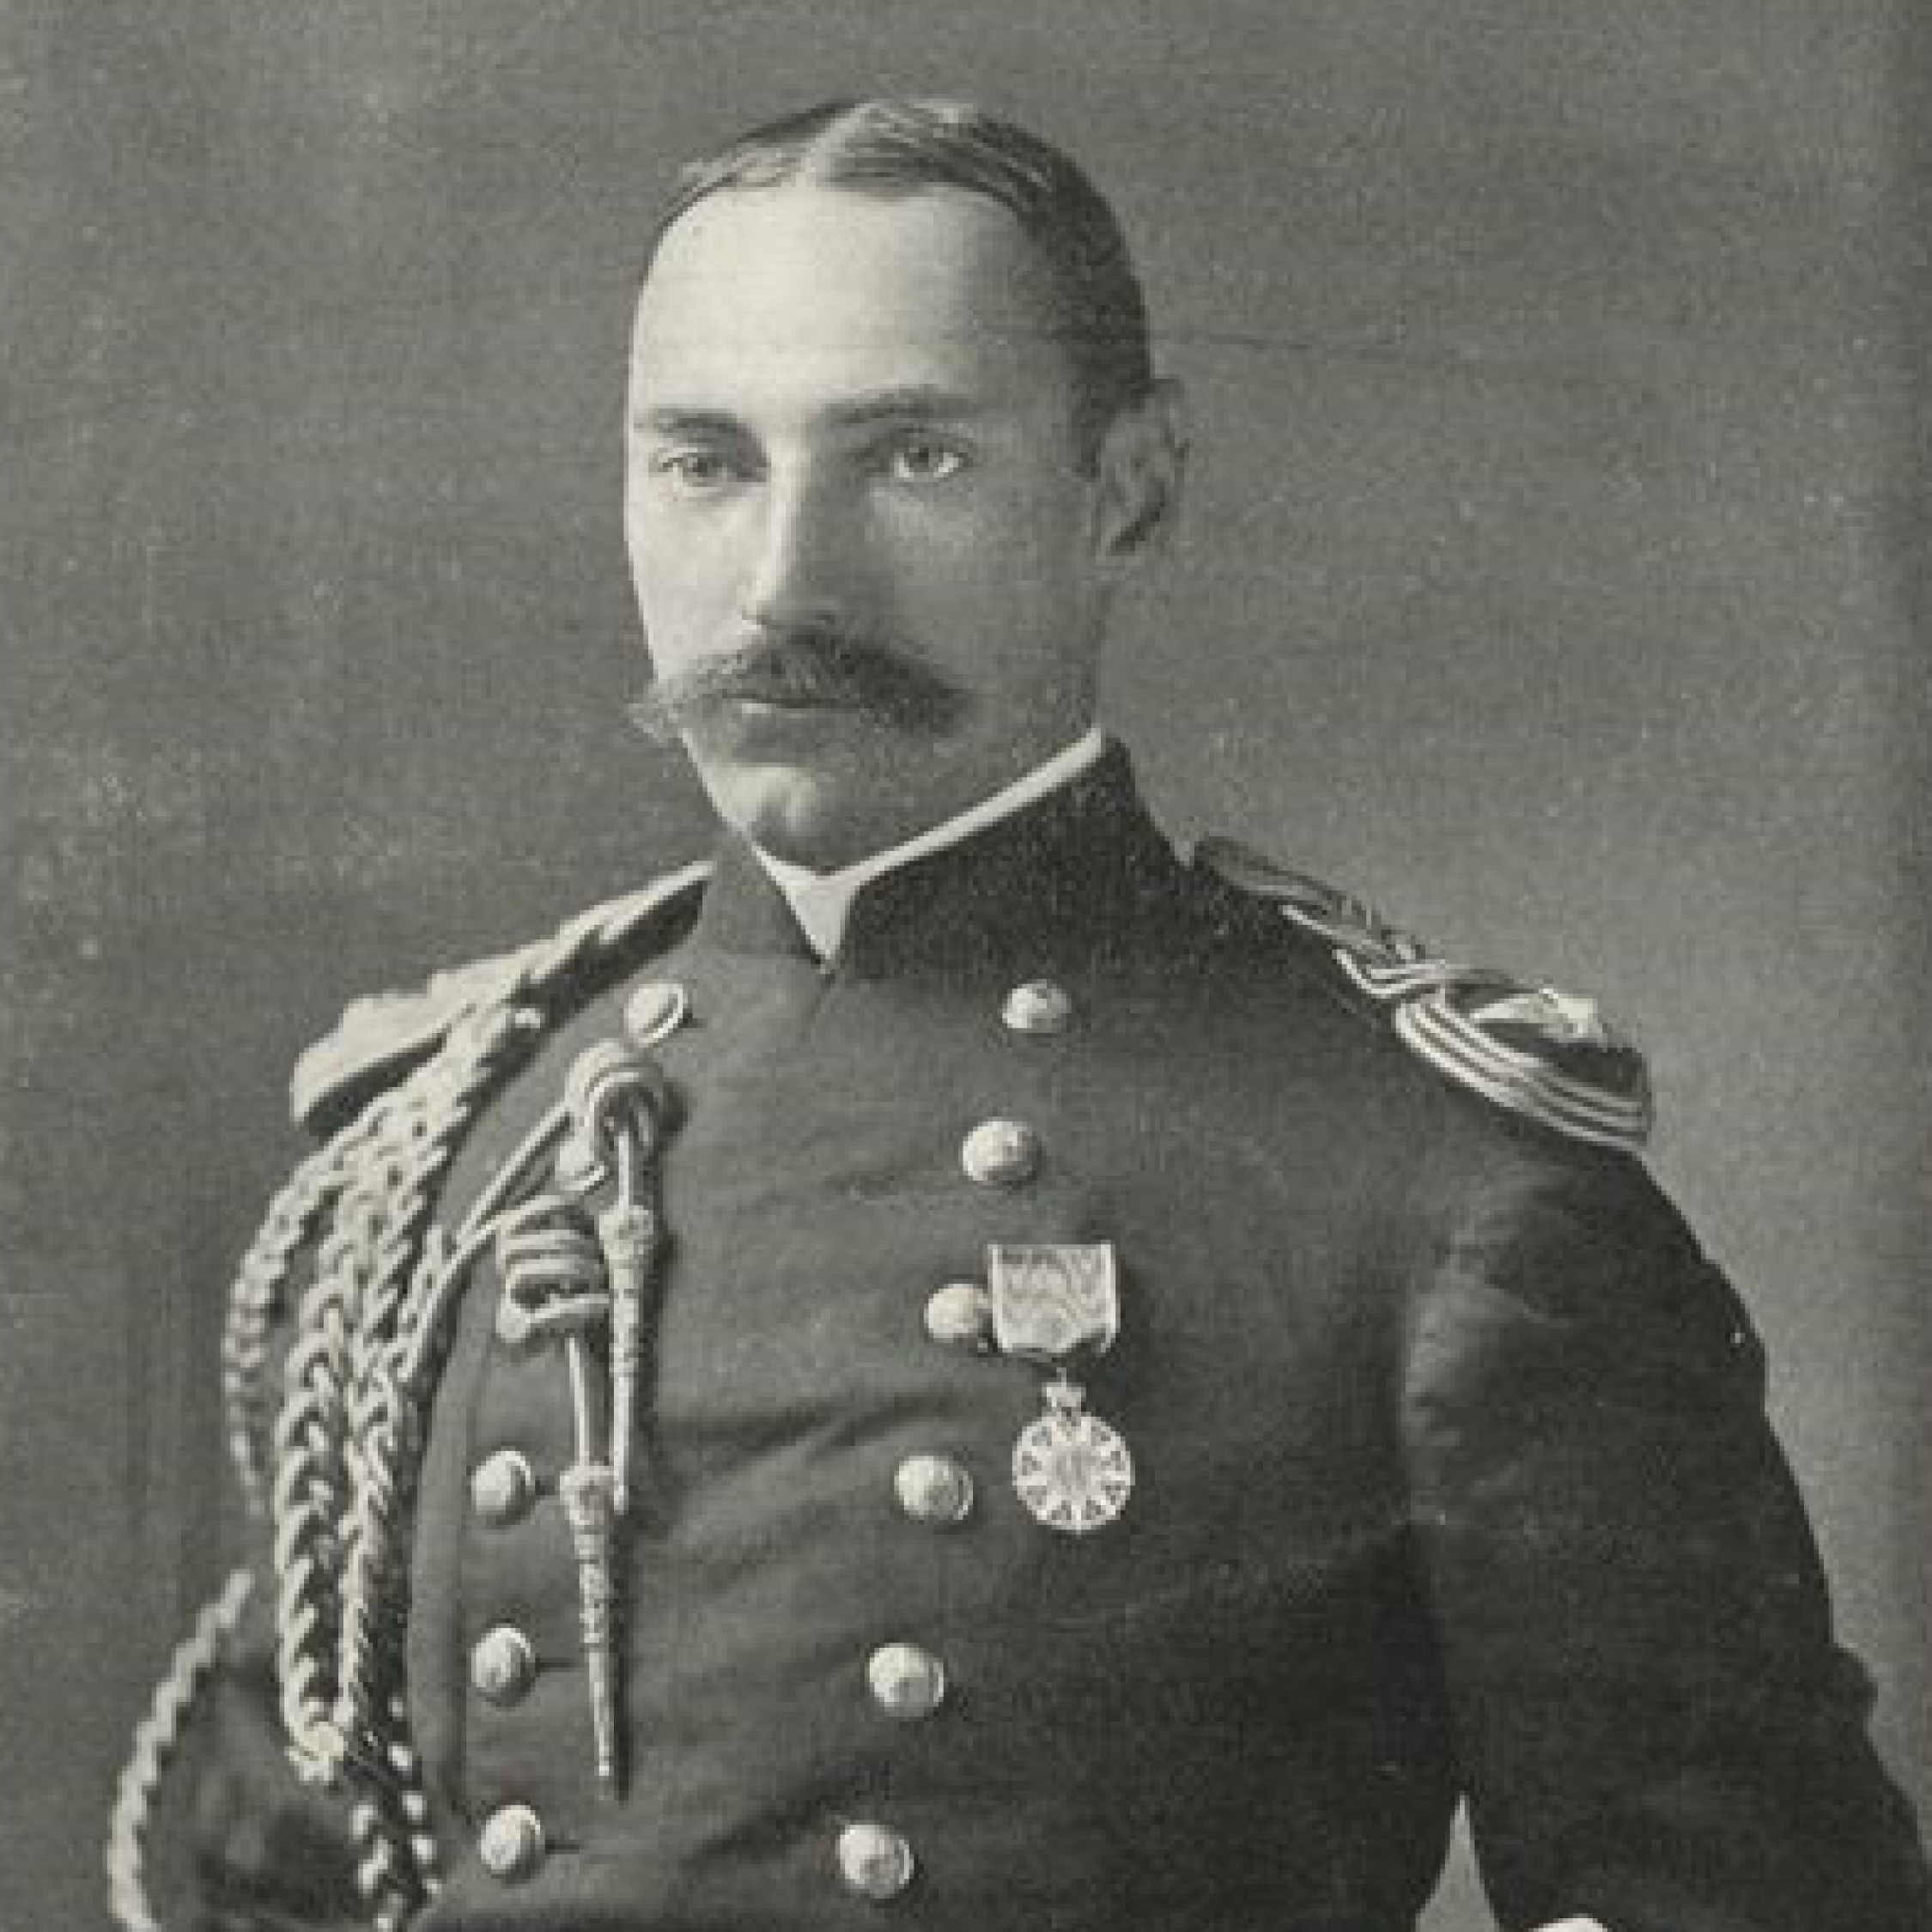 Photo of Passenger John Jacob Astor IV